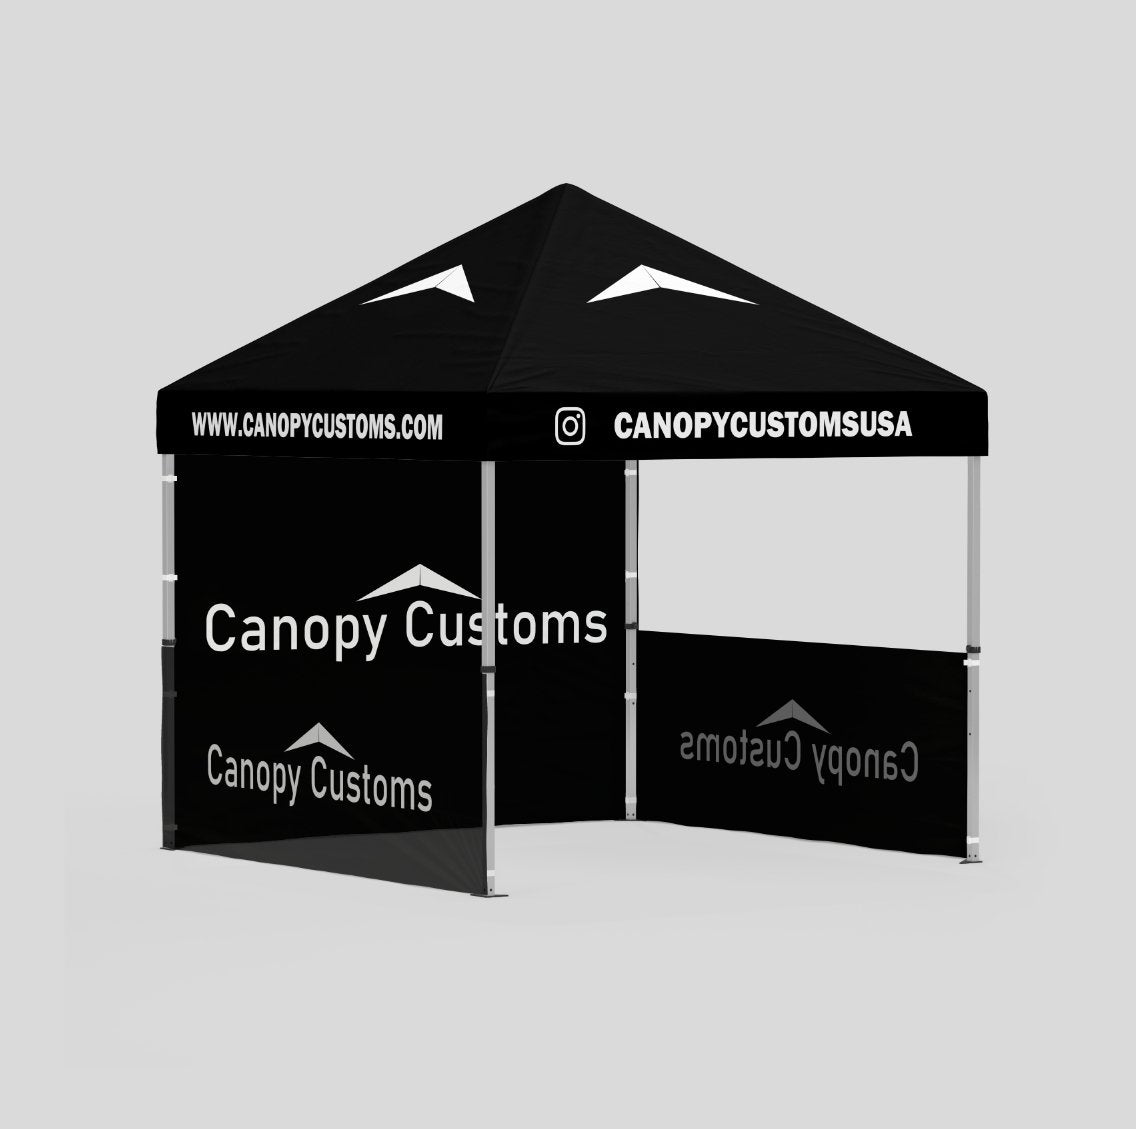 Full Custom Canopy - Canopy Customs